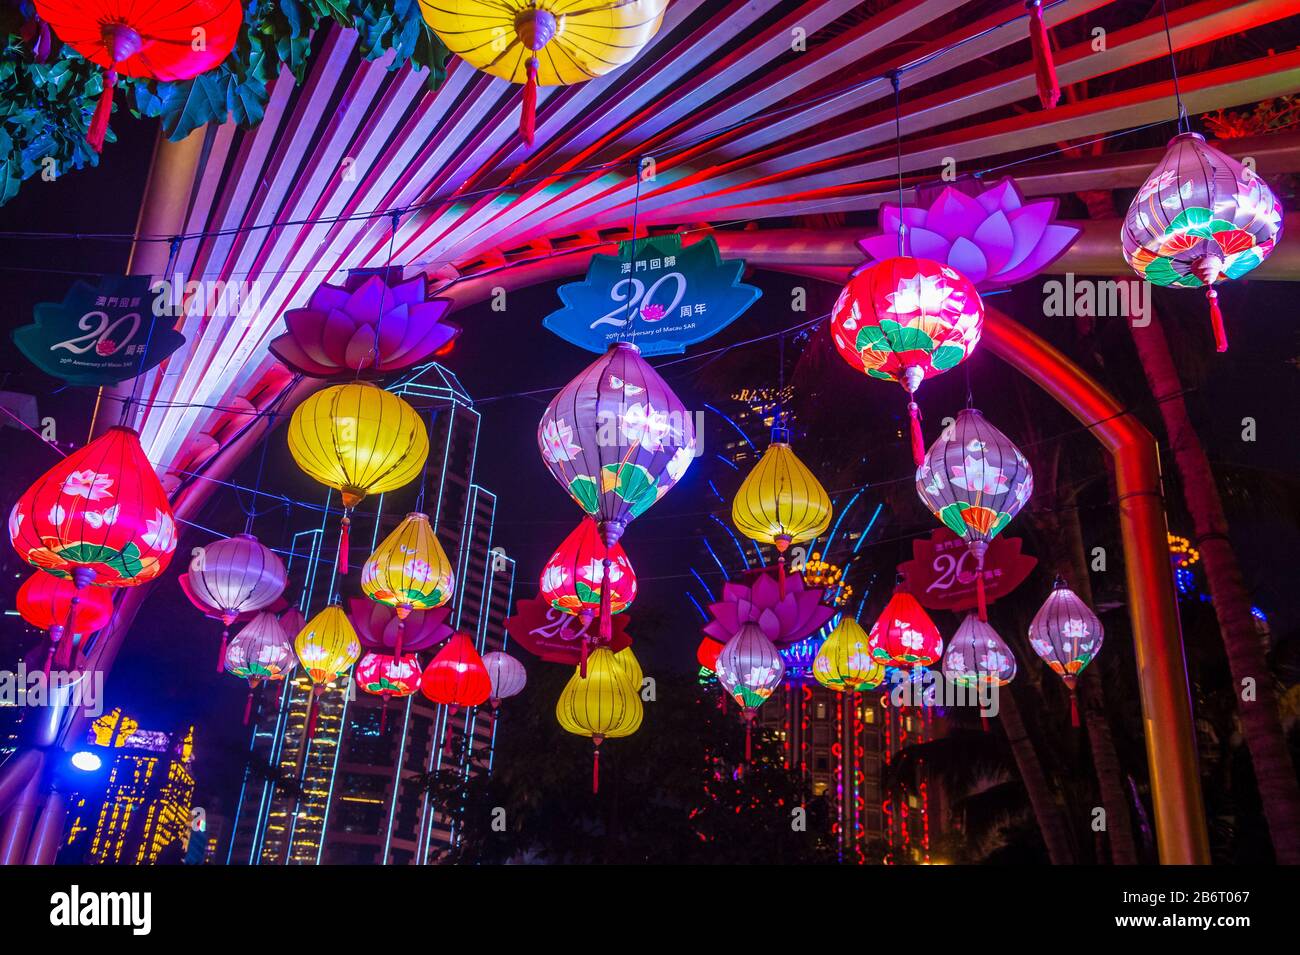 Lights installation in Macau during the annual Macau Light festival Stock Photo